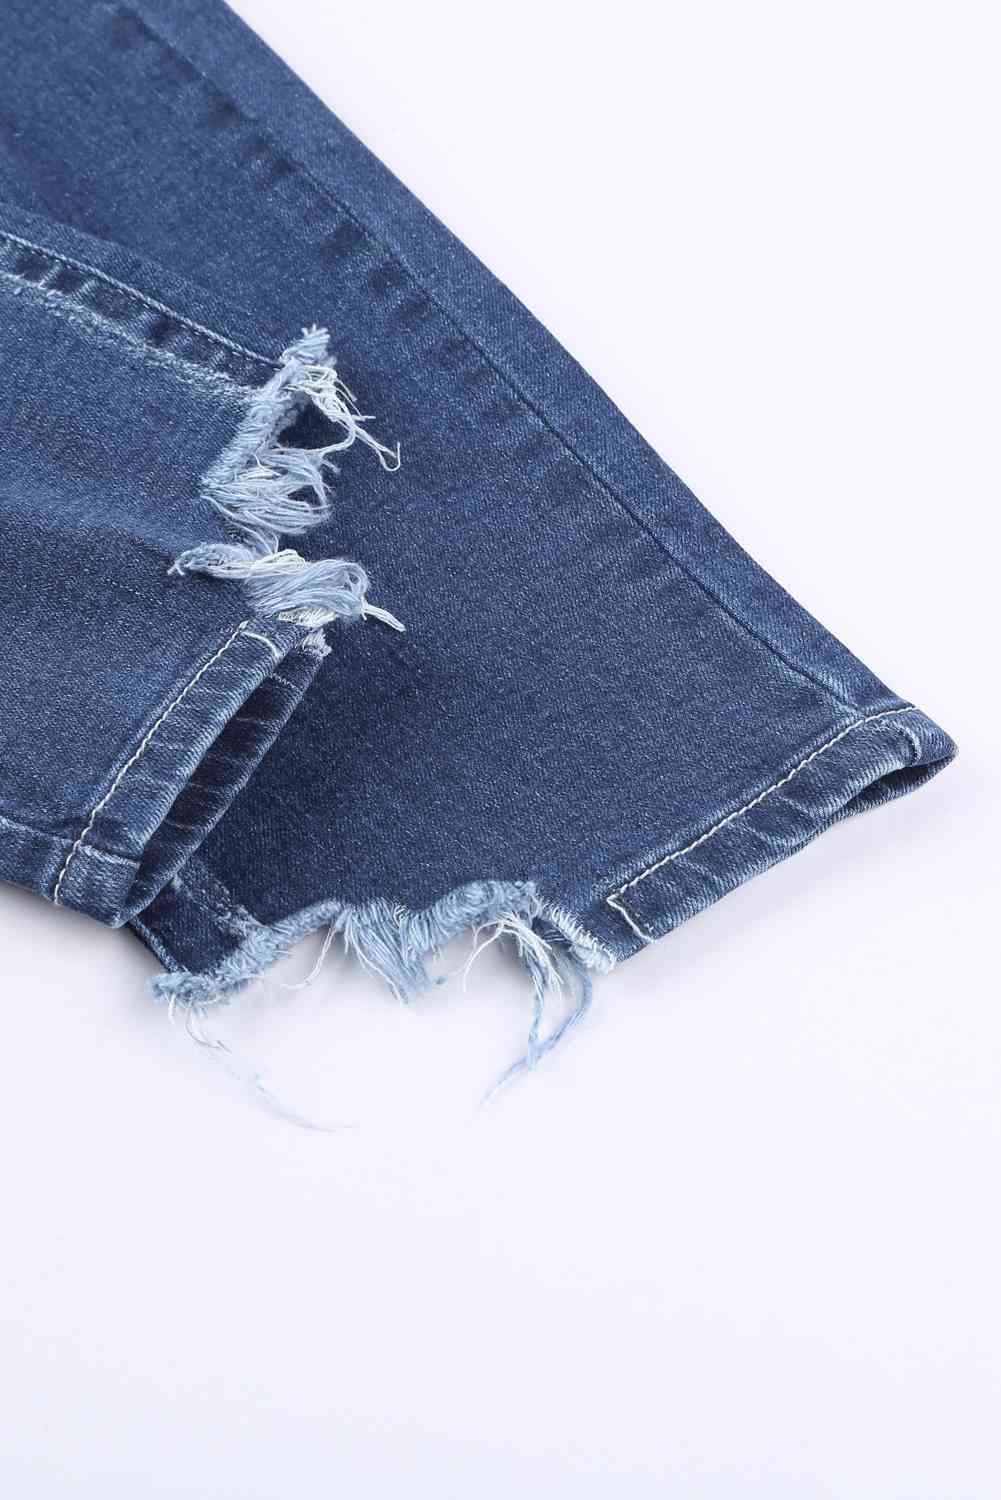 Baeful High-Rise Distressed Hem Detail Jeans